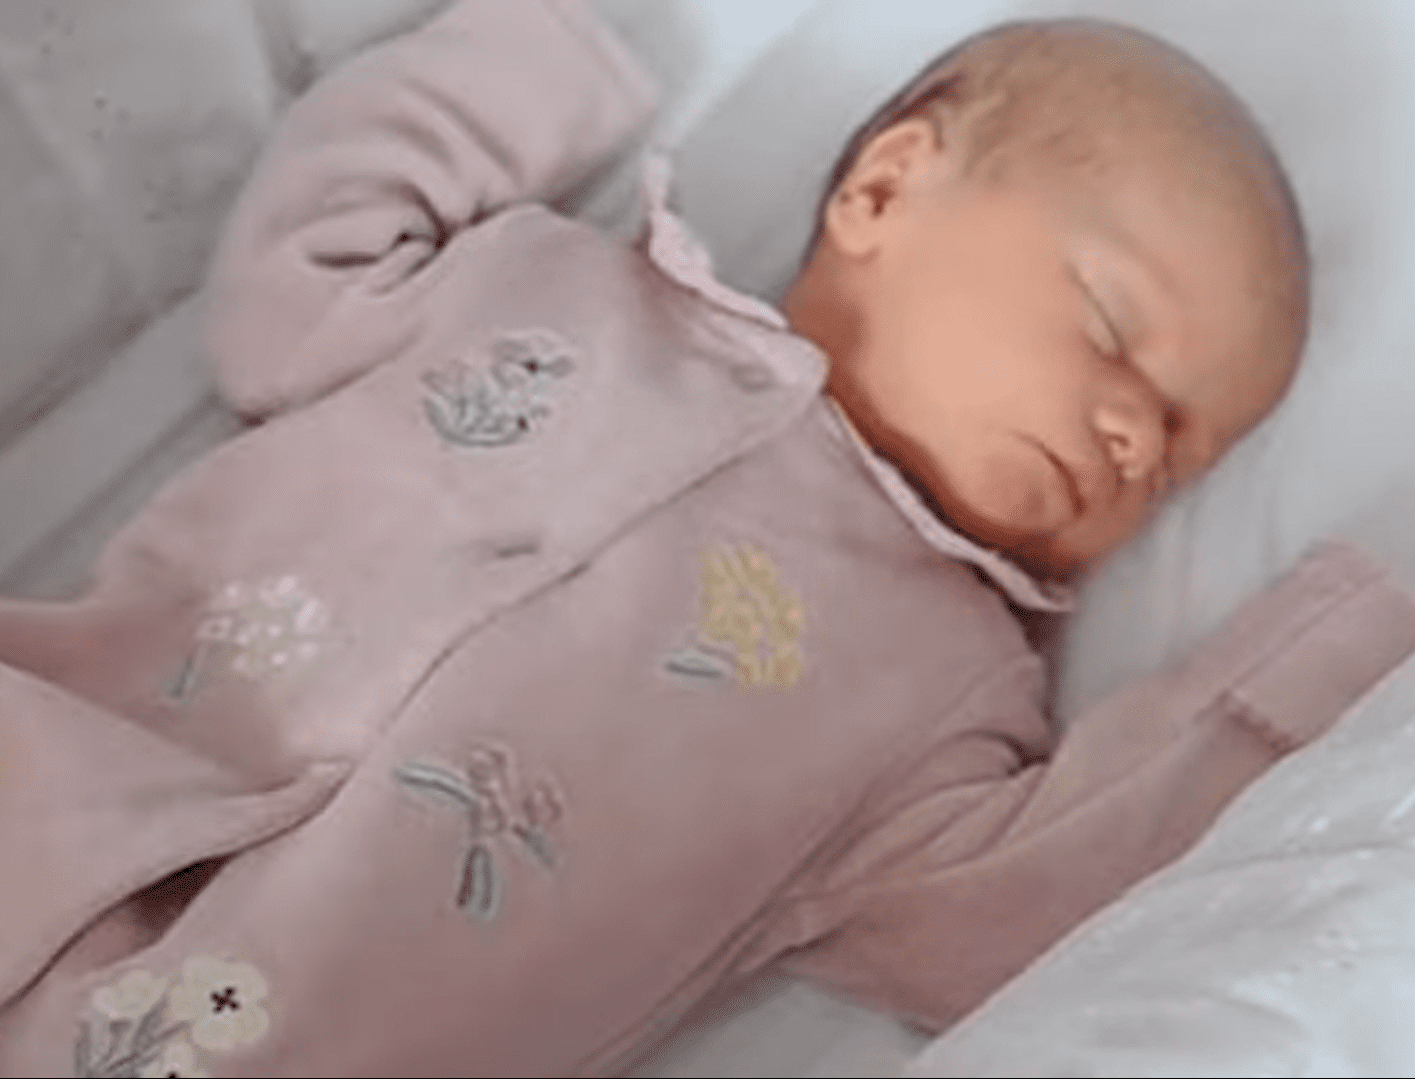 Baby Baylee-Rae sleeping. | Source: youtube.com/Wales Online